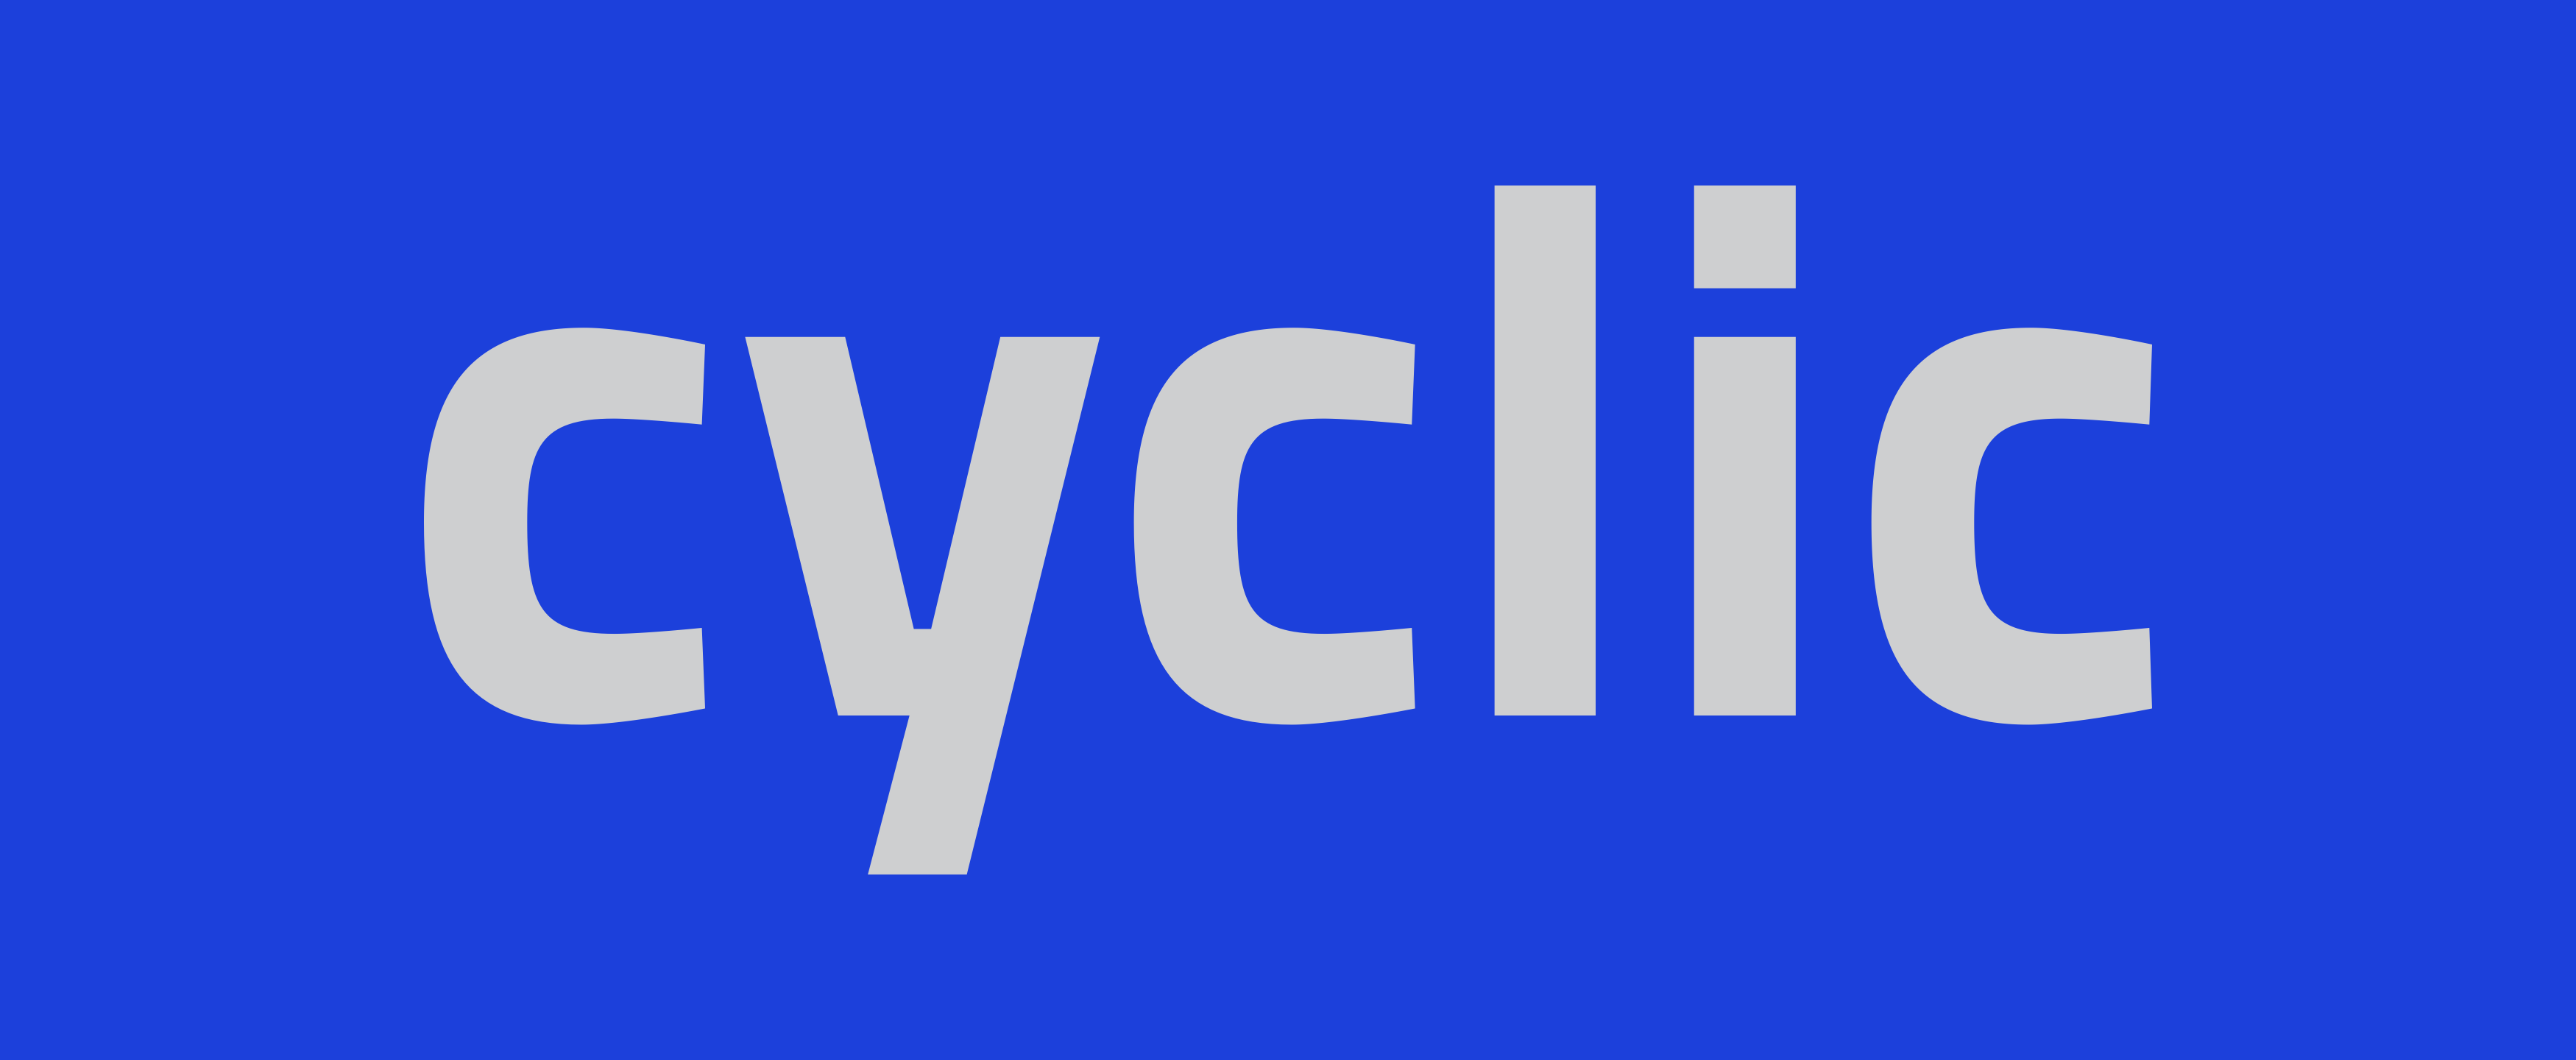 Cyclic Logo